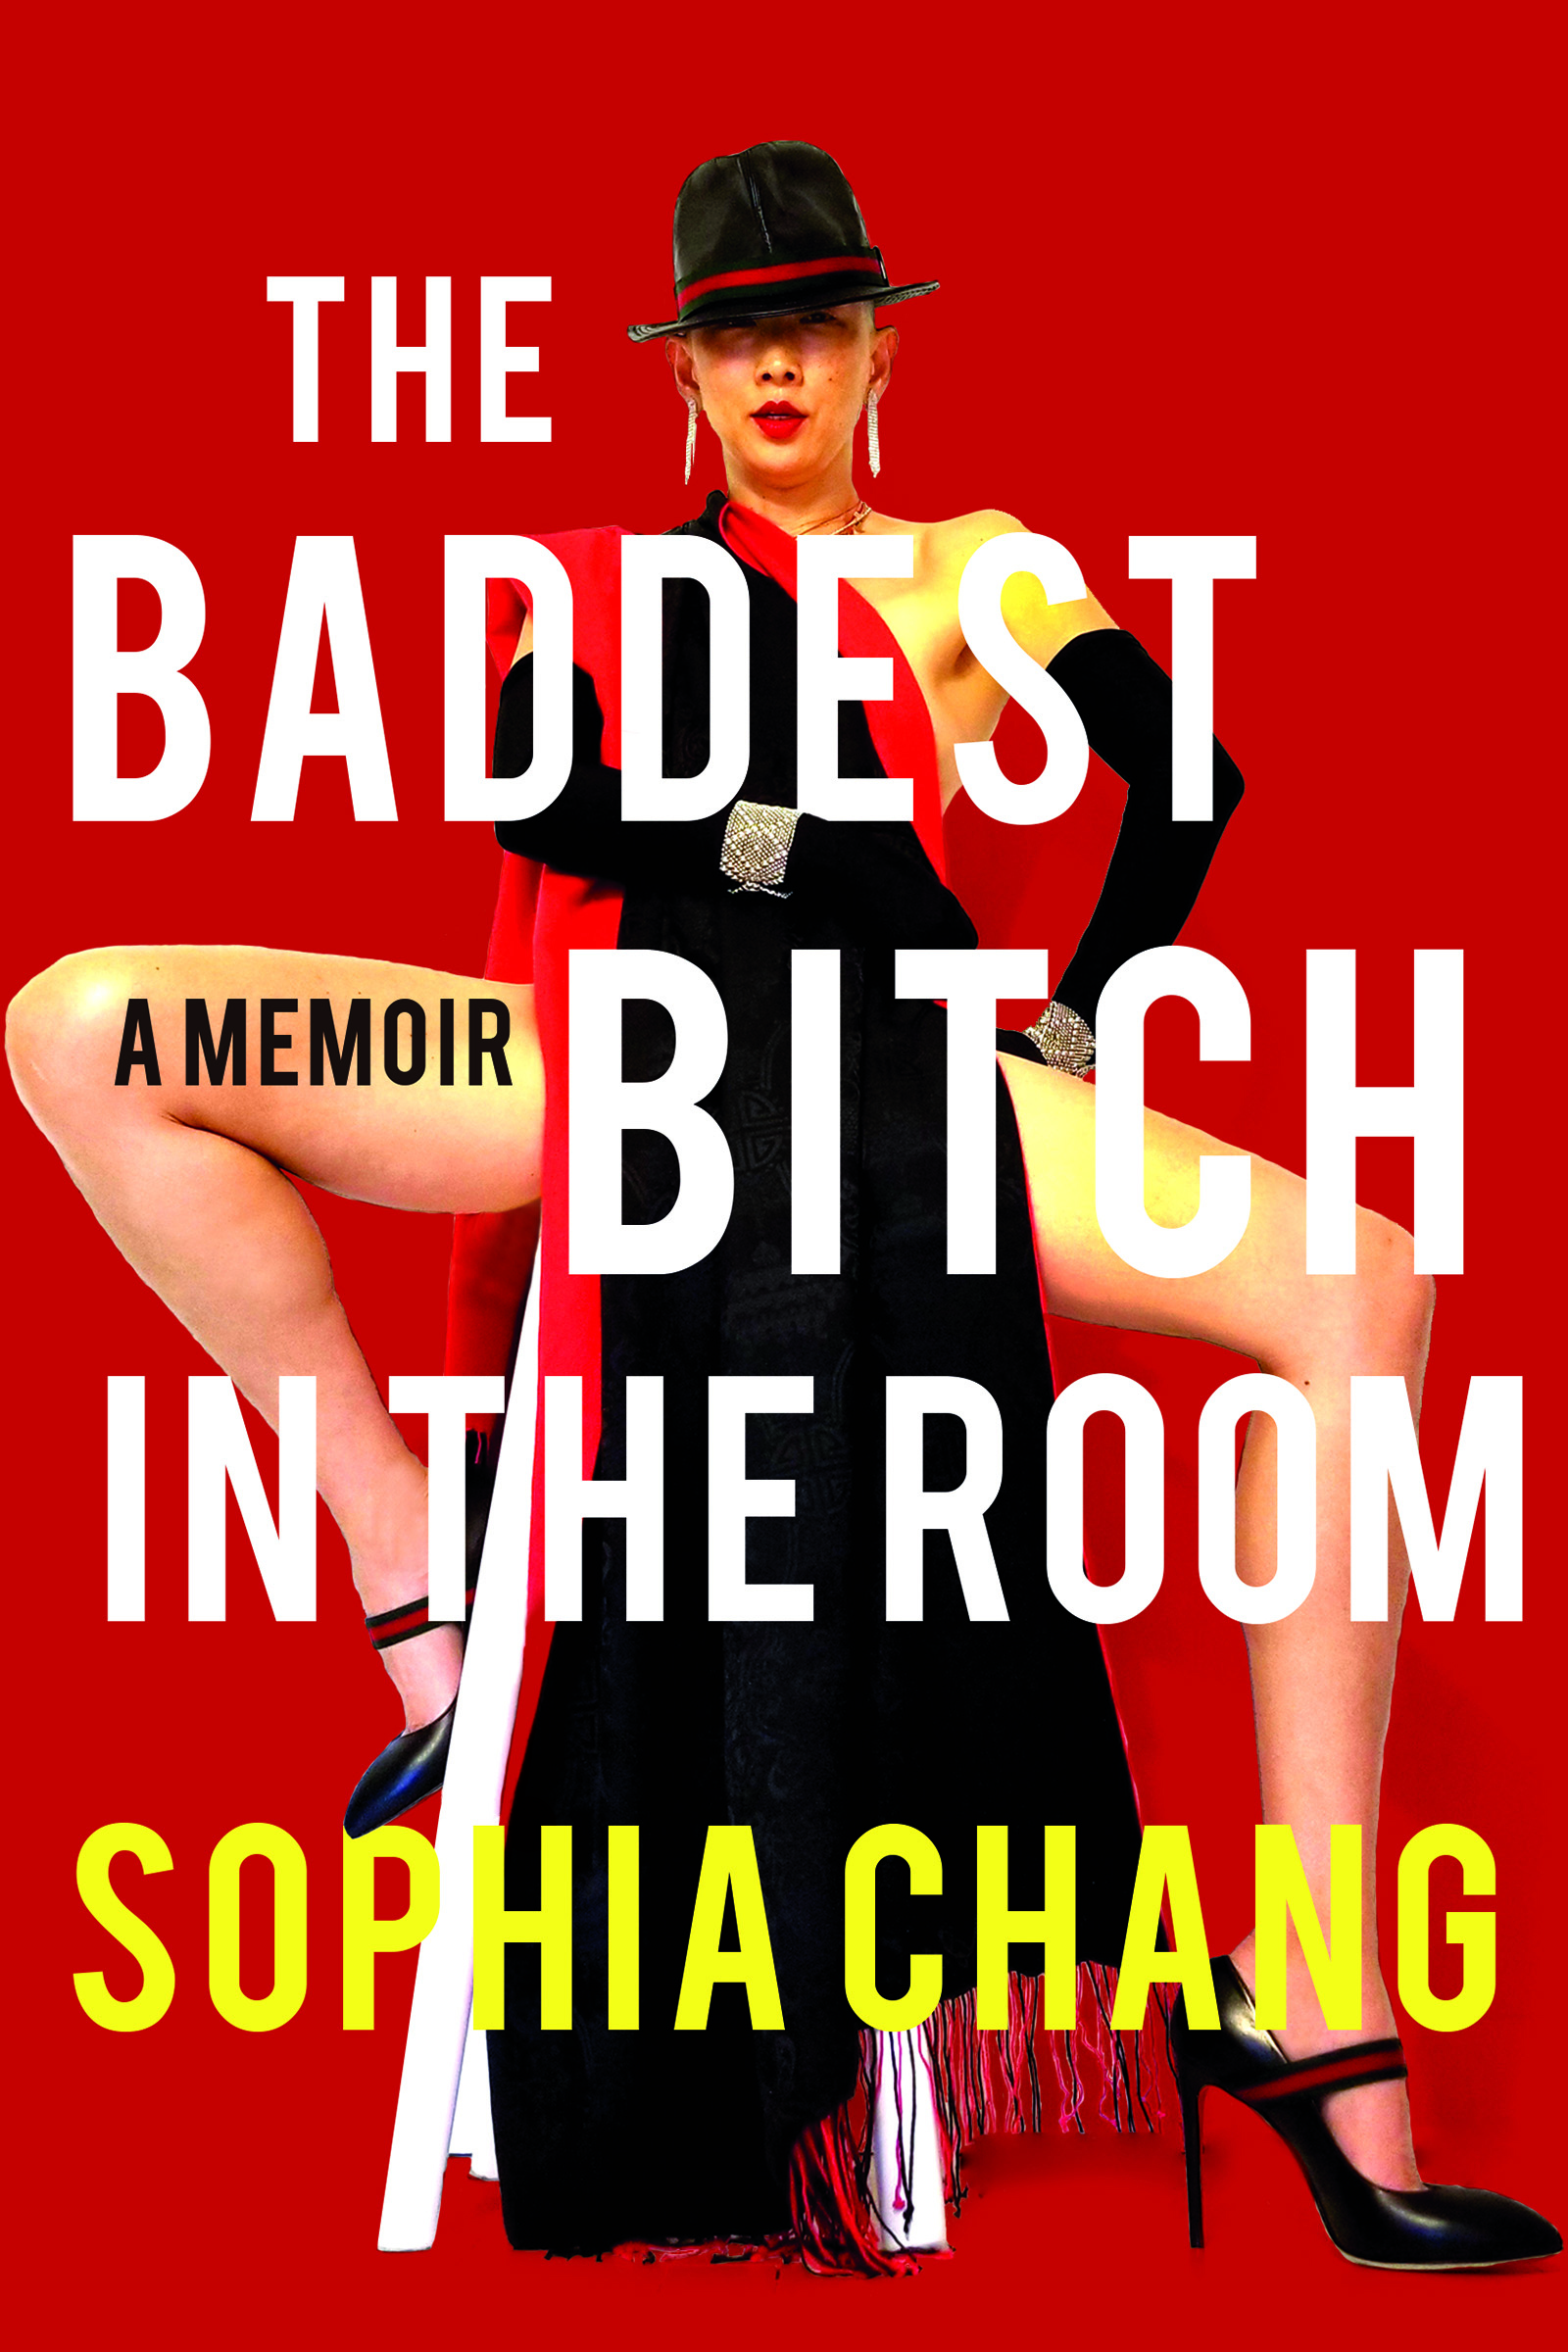 The baddest bitch in the room cvr 300dpi print res the baddest bitch in the room: a memoir